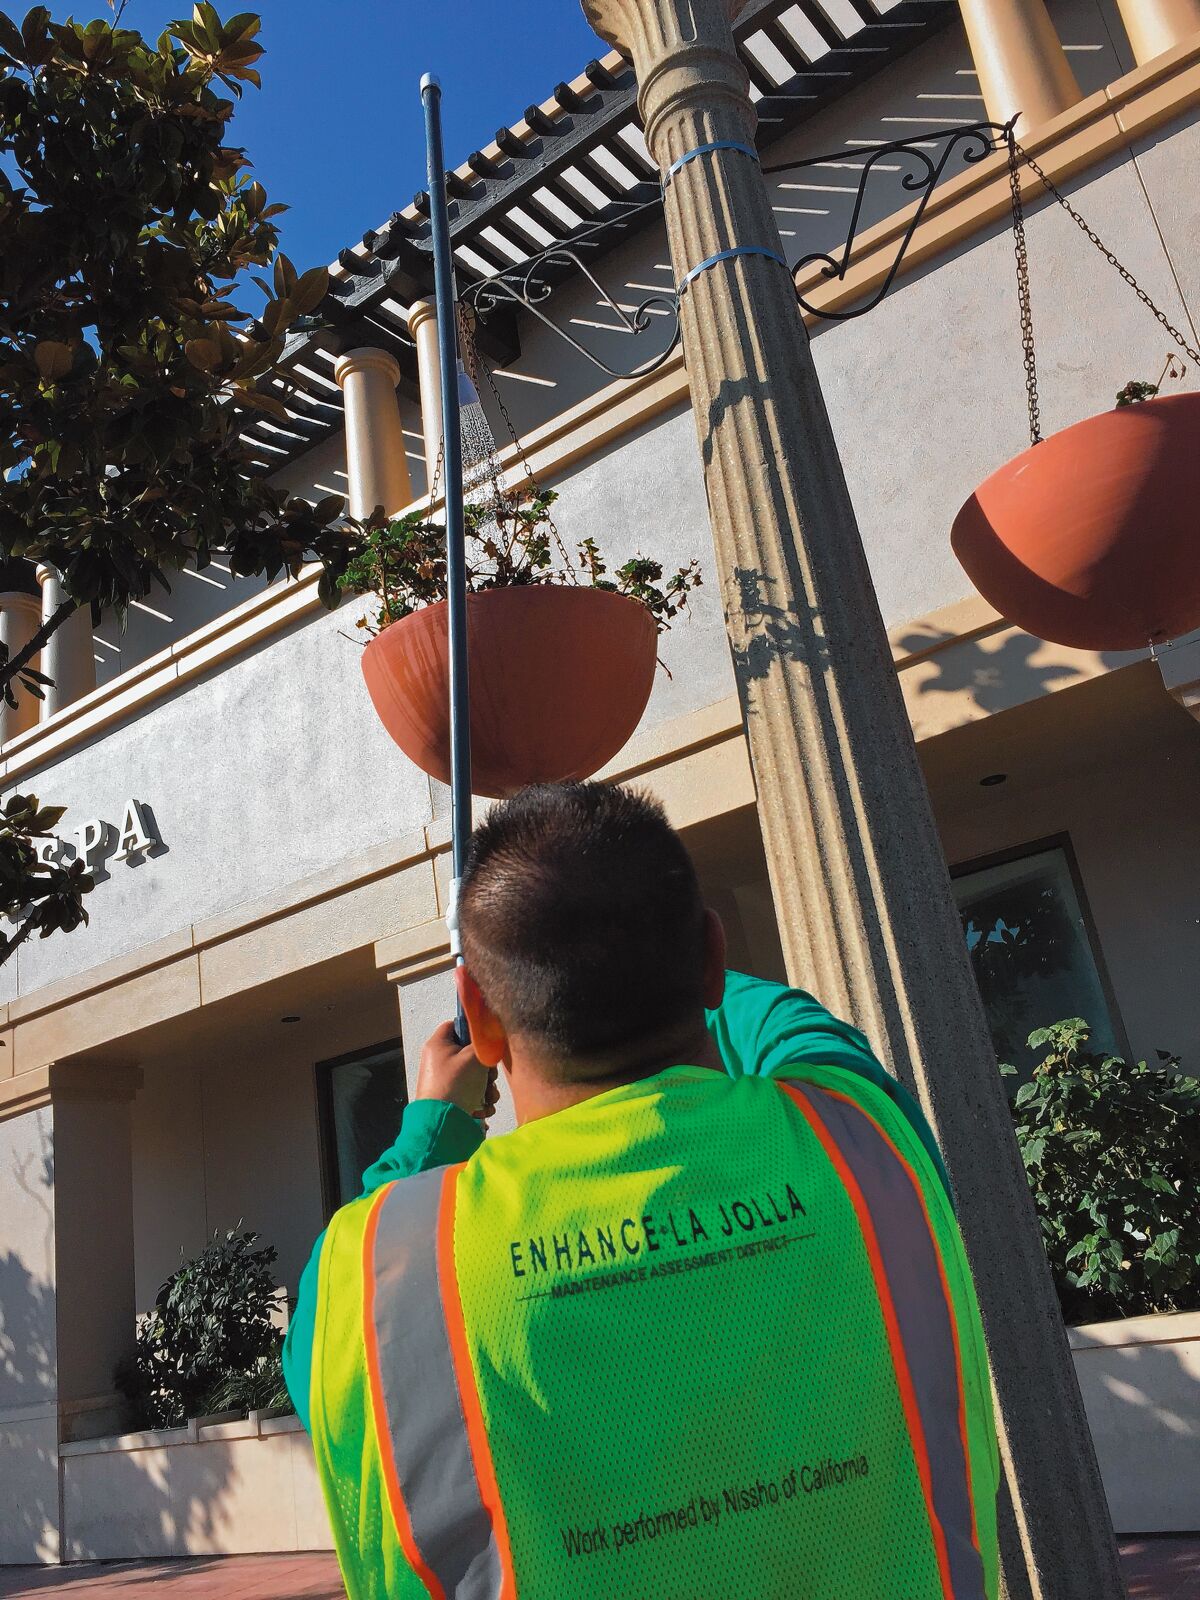 Ciro Rodriguez, representing Enhance La Jolla, waters some previously neglected planters on Herschel Avenue in the Village of La Jolla, October 2019.